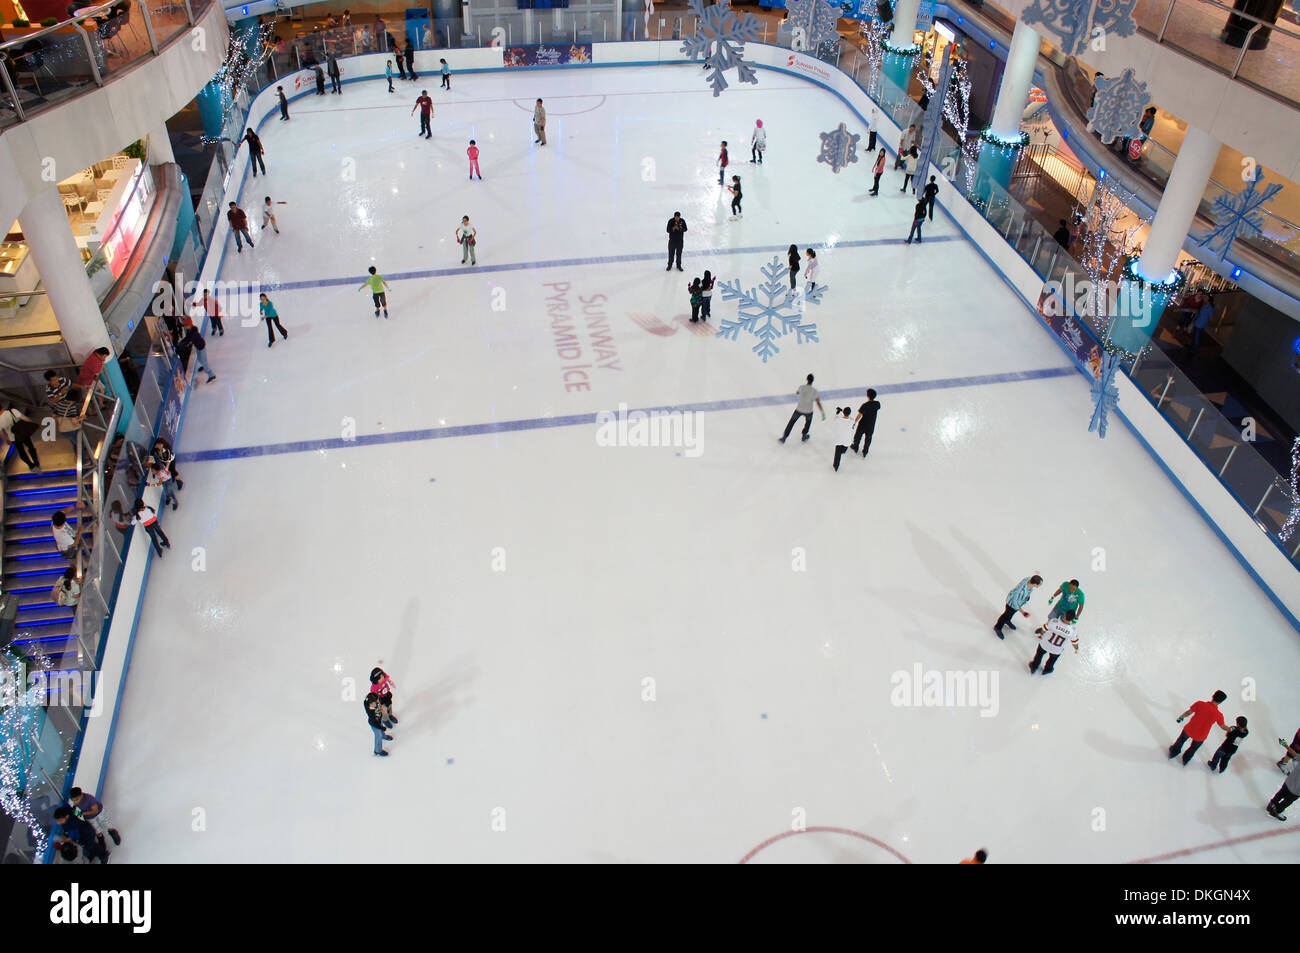 Indoor-Eisbahn bei Sunway Pyramid-Shopping-Mall, Malaysia Stockfoto